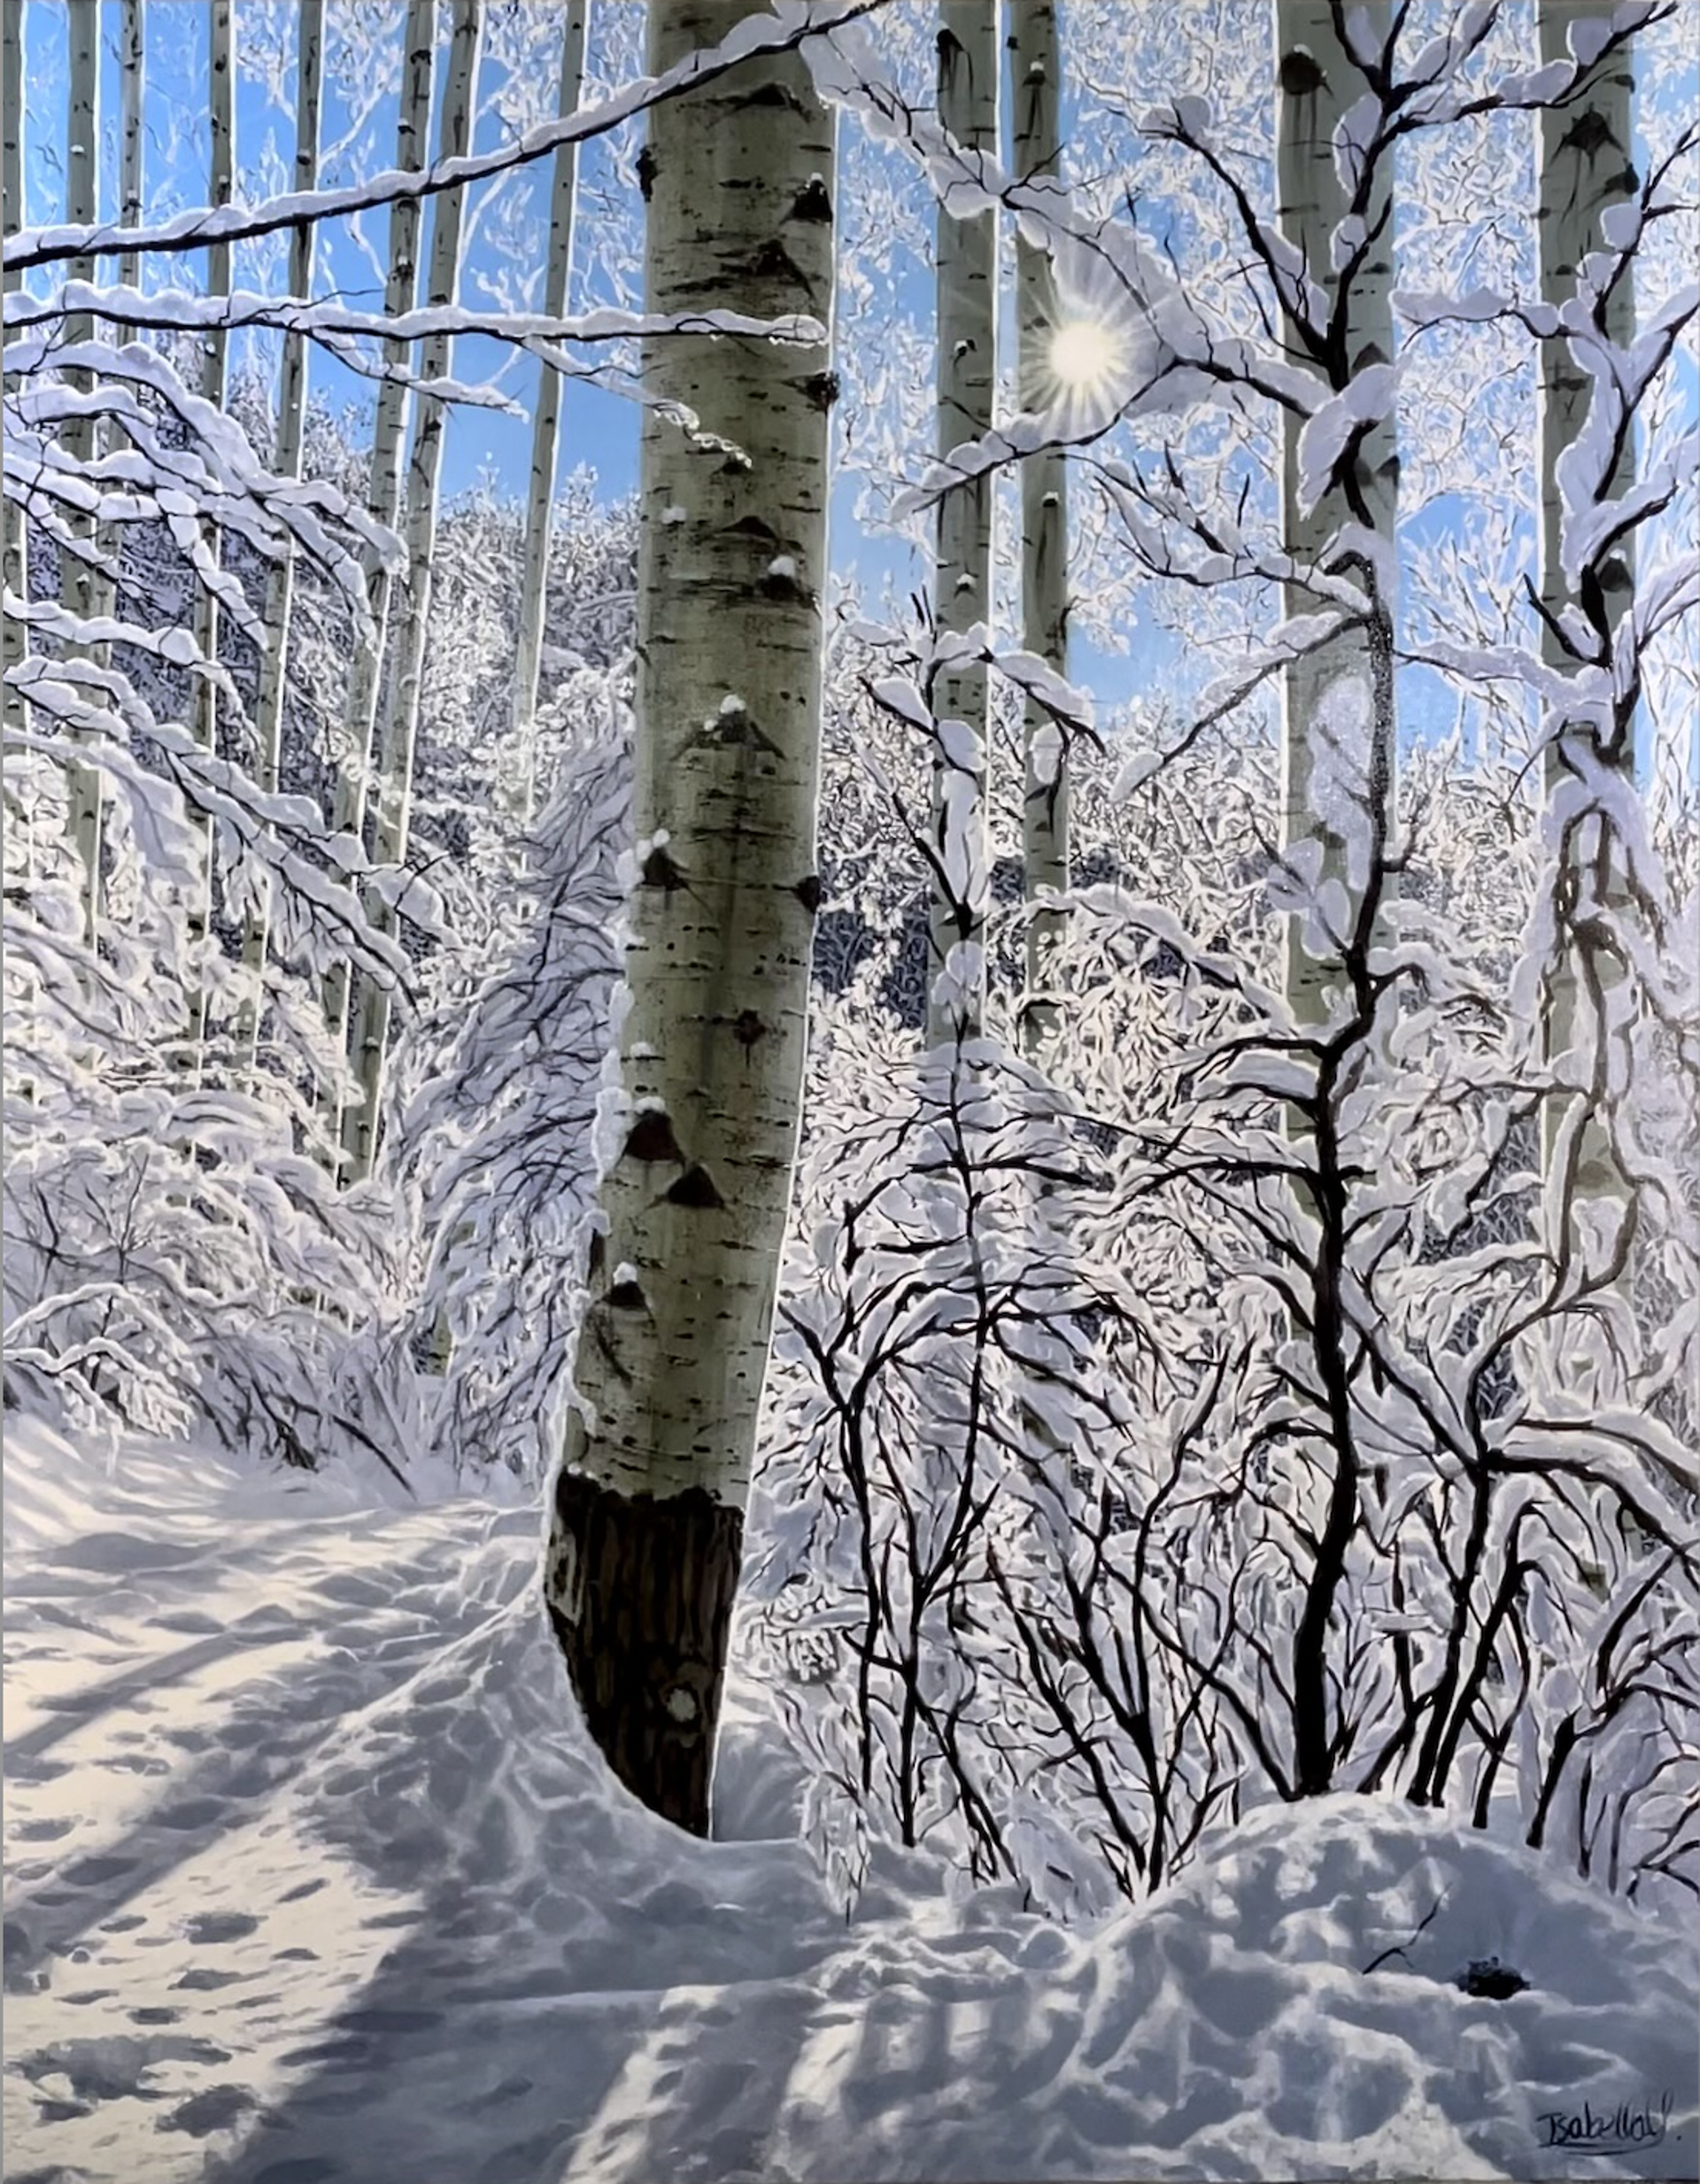 Tom Blake Trail; October Snow Storm by Isabella Garaffa